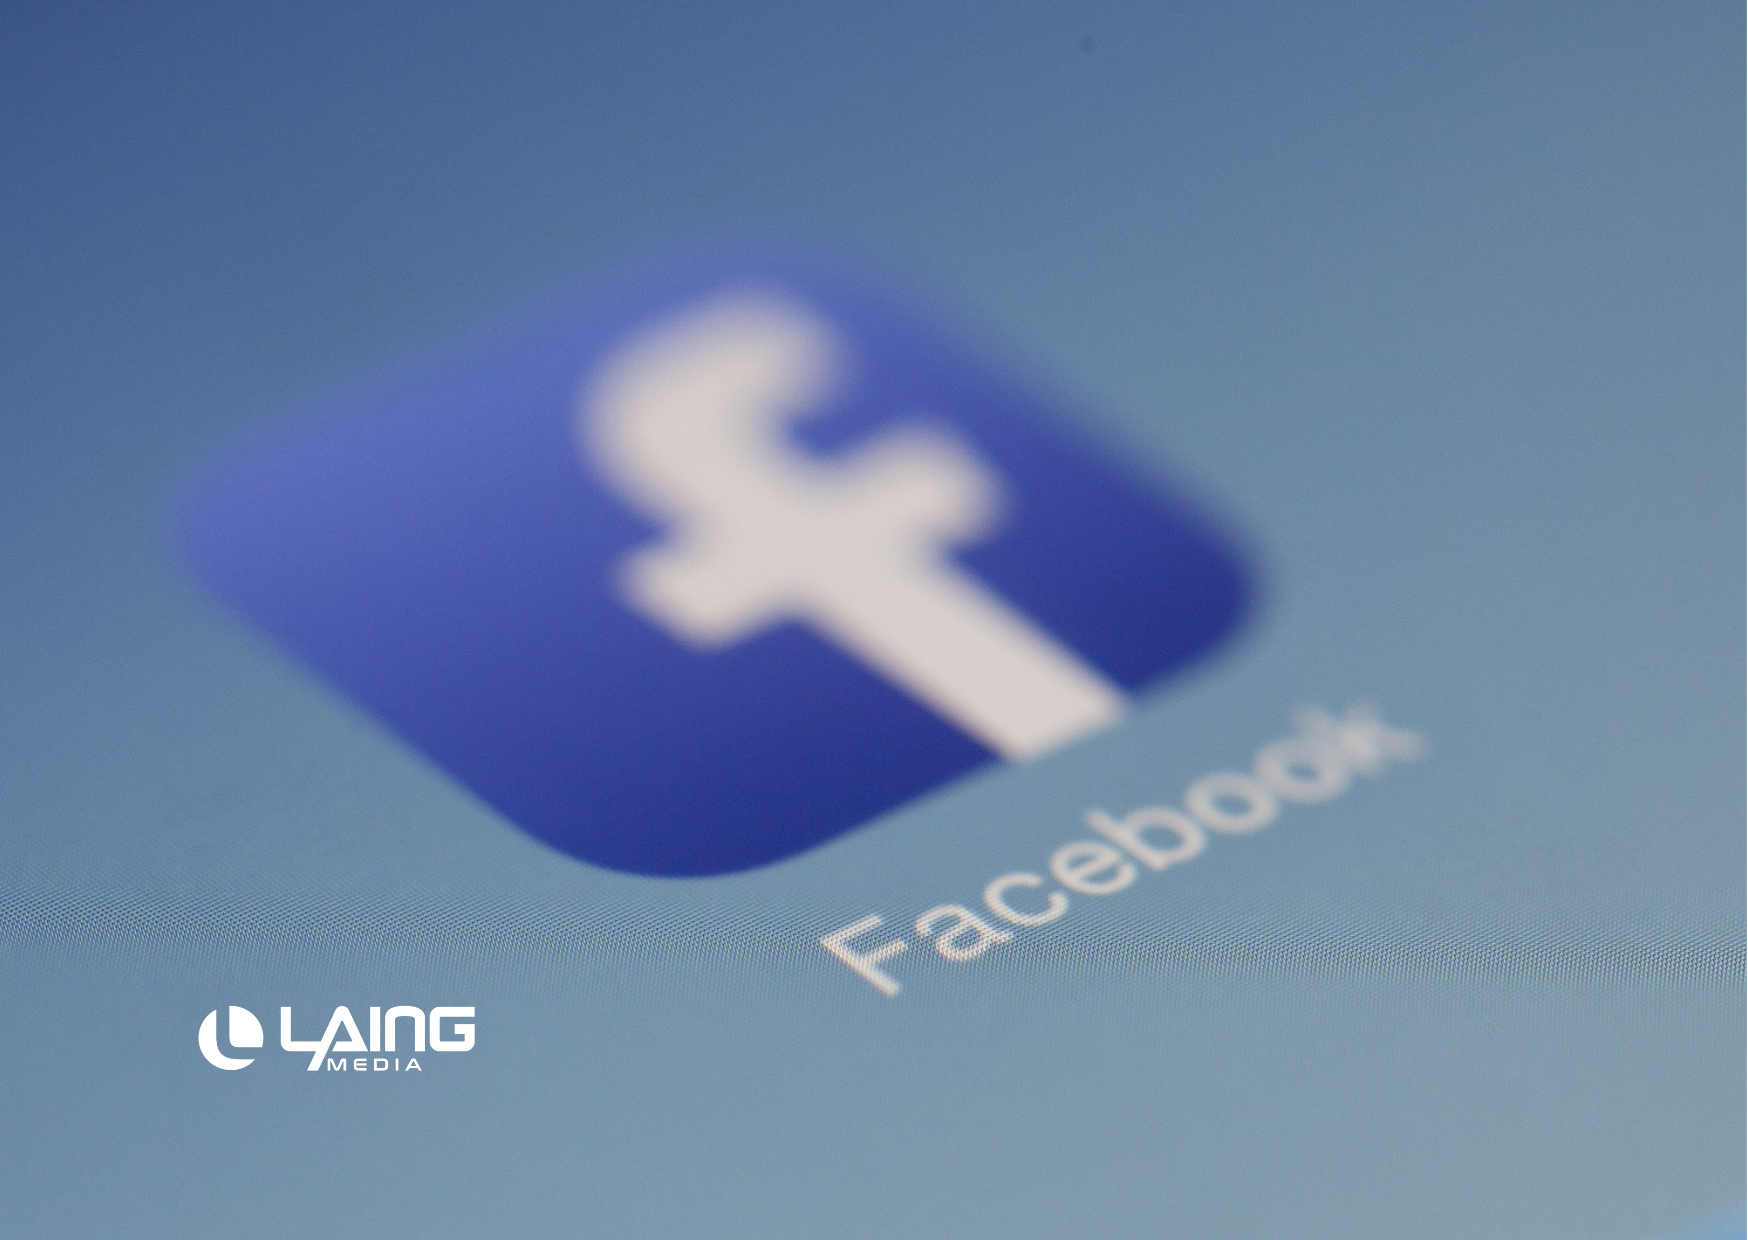 Facebook blue Icon with Laing media logo in left bottom corner